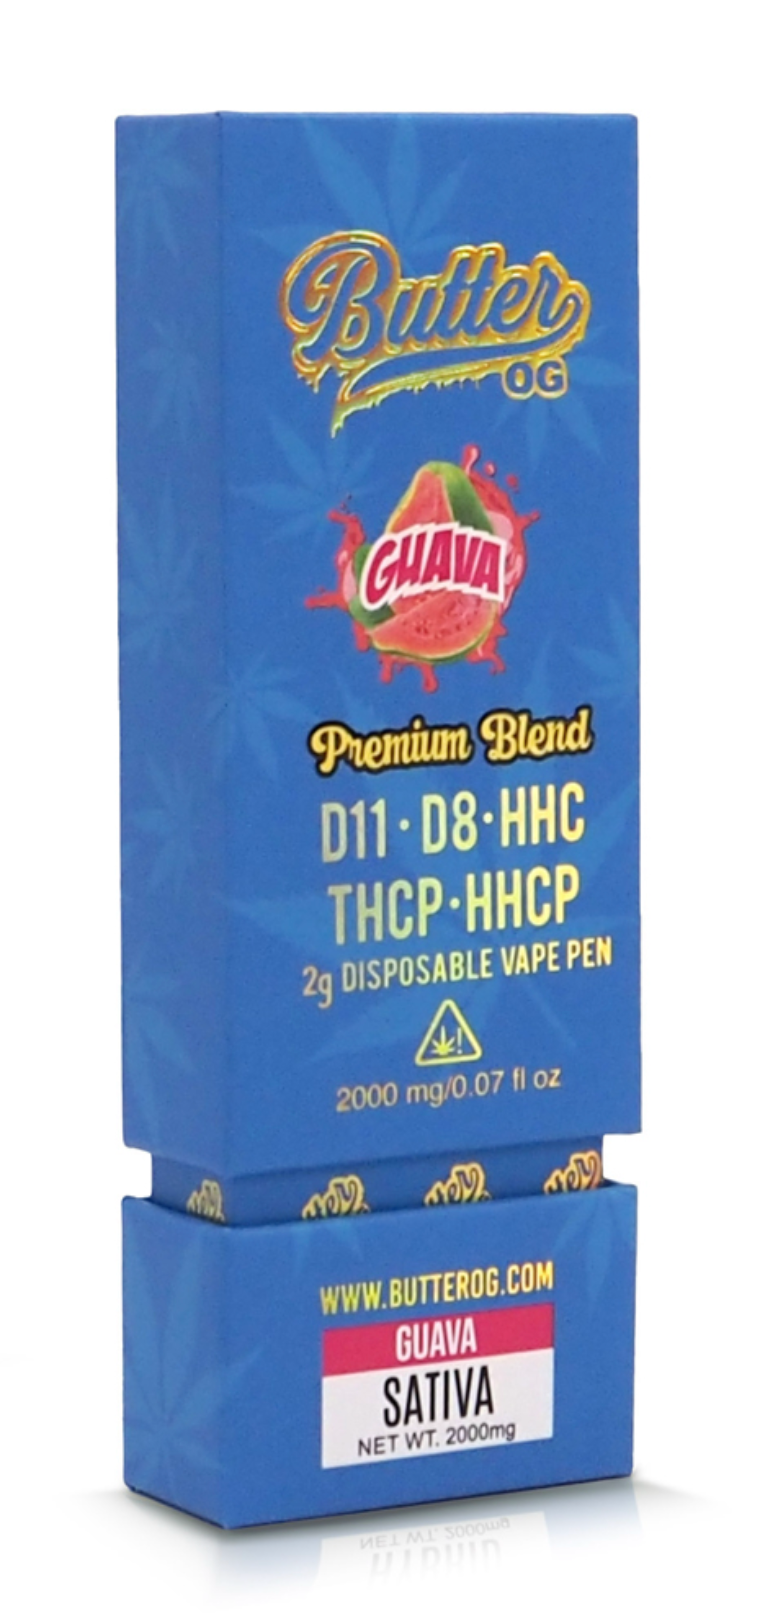 Butter OG Premium Blend D11, D8, HHC, THCP, HHCP 2g Disposable Vape - Guava (Sativa) - Headshop.com